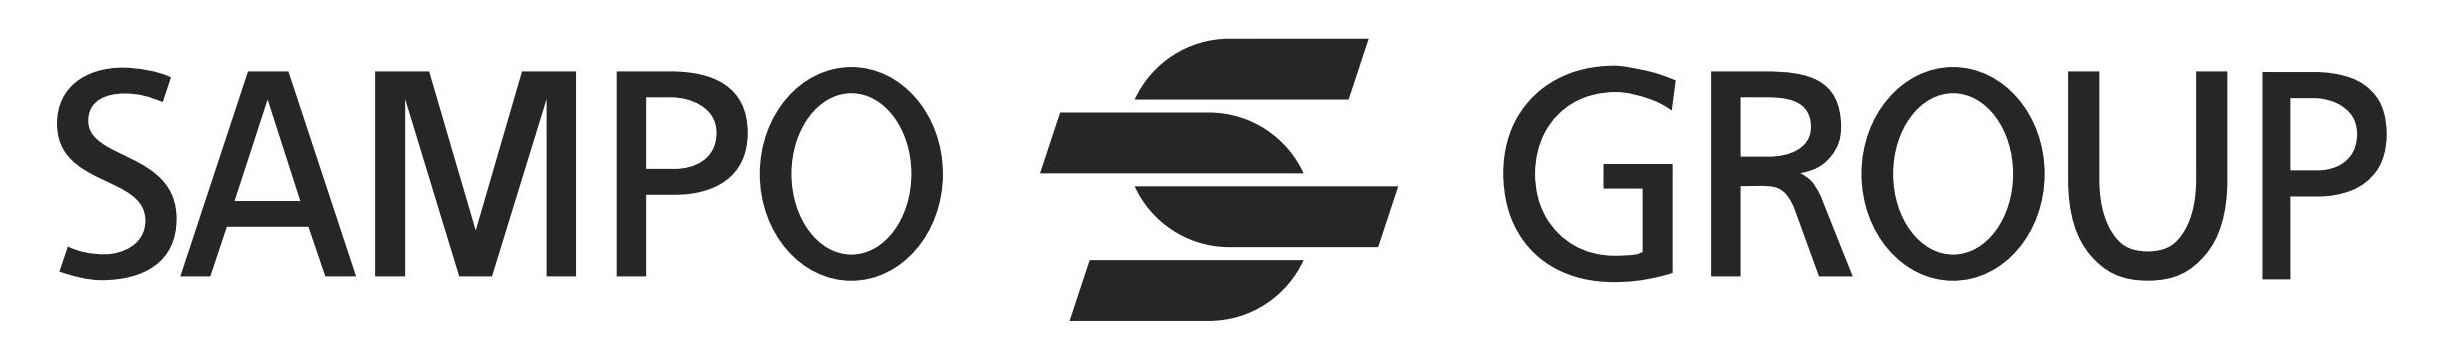 Sampo Group Logo [EPS File]